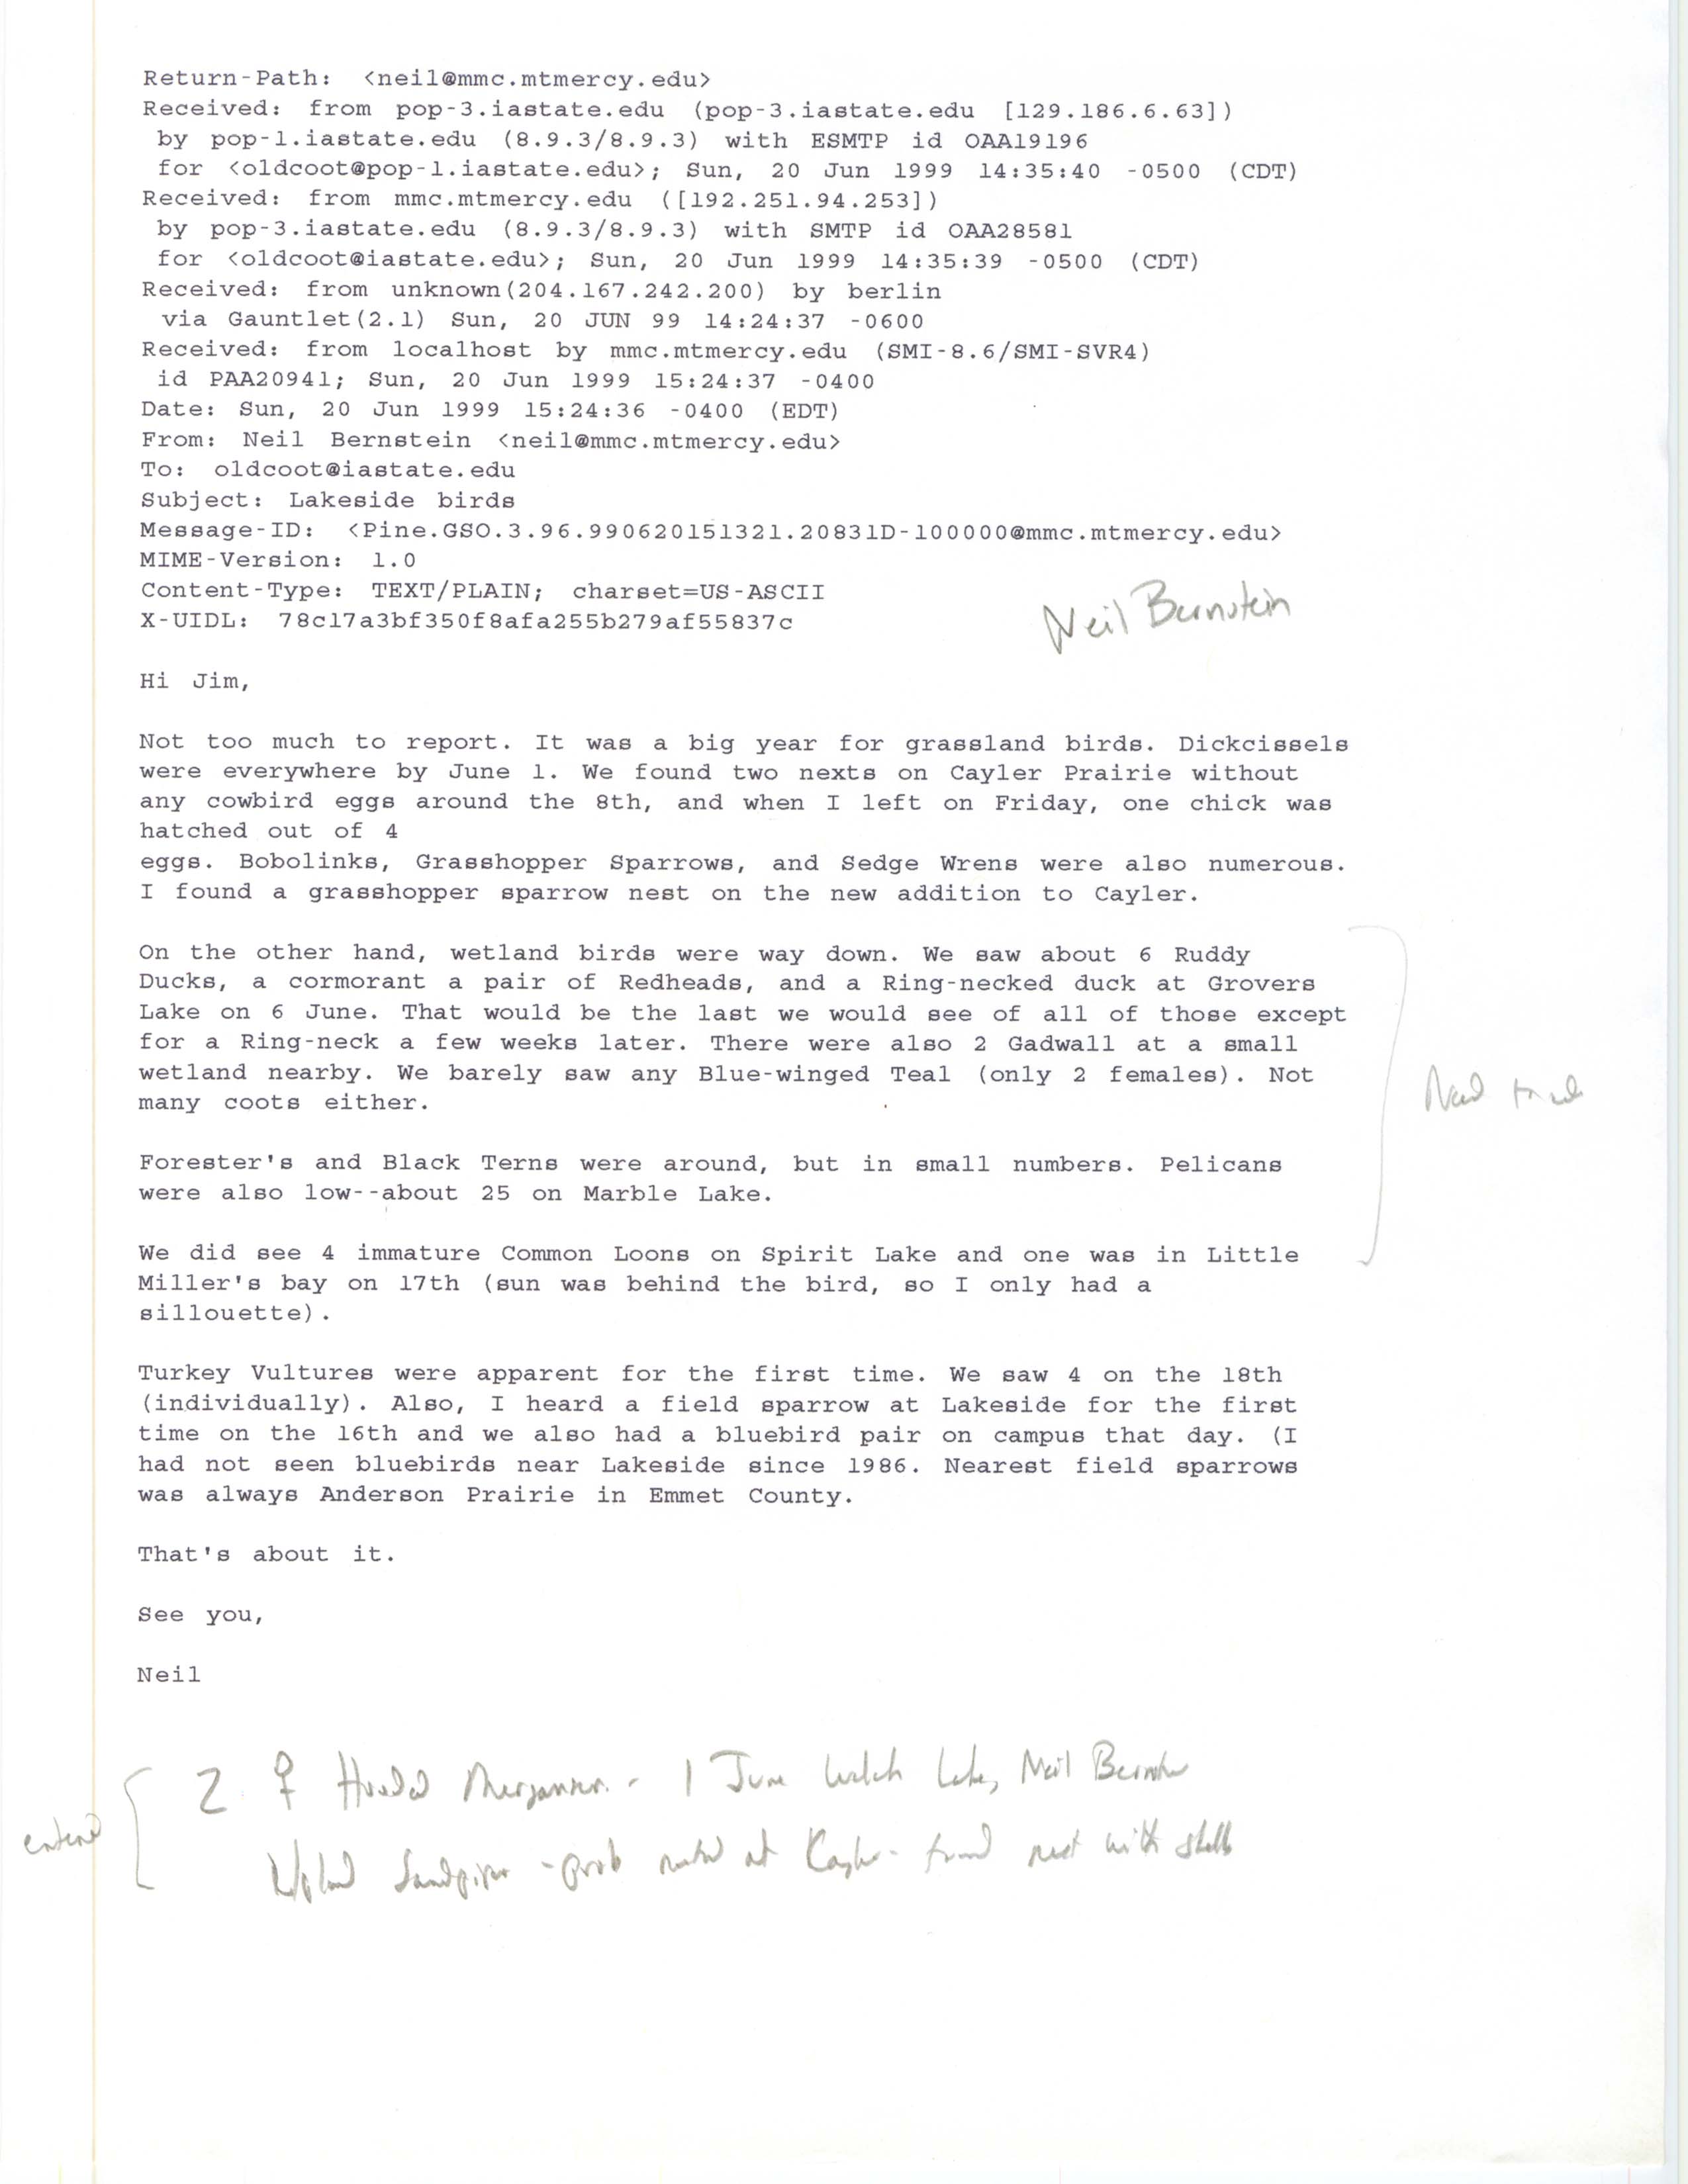 Neil Bernstein email to Jim Dinsmore regarding Lakeside birds, June 20, 1999